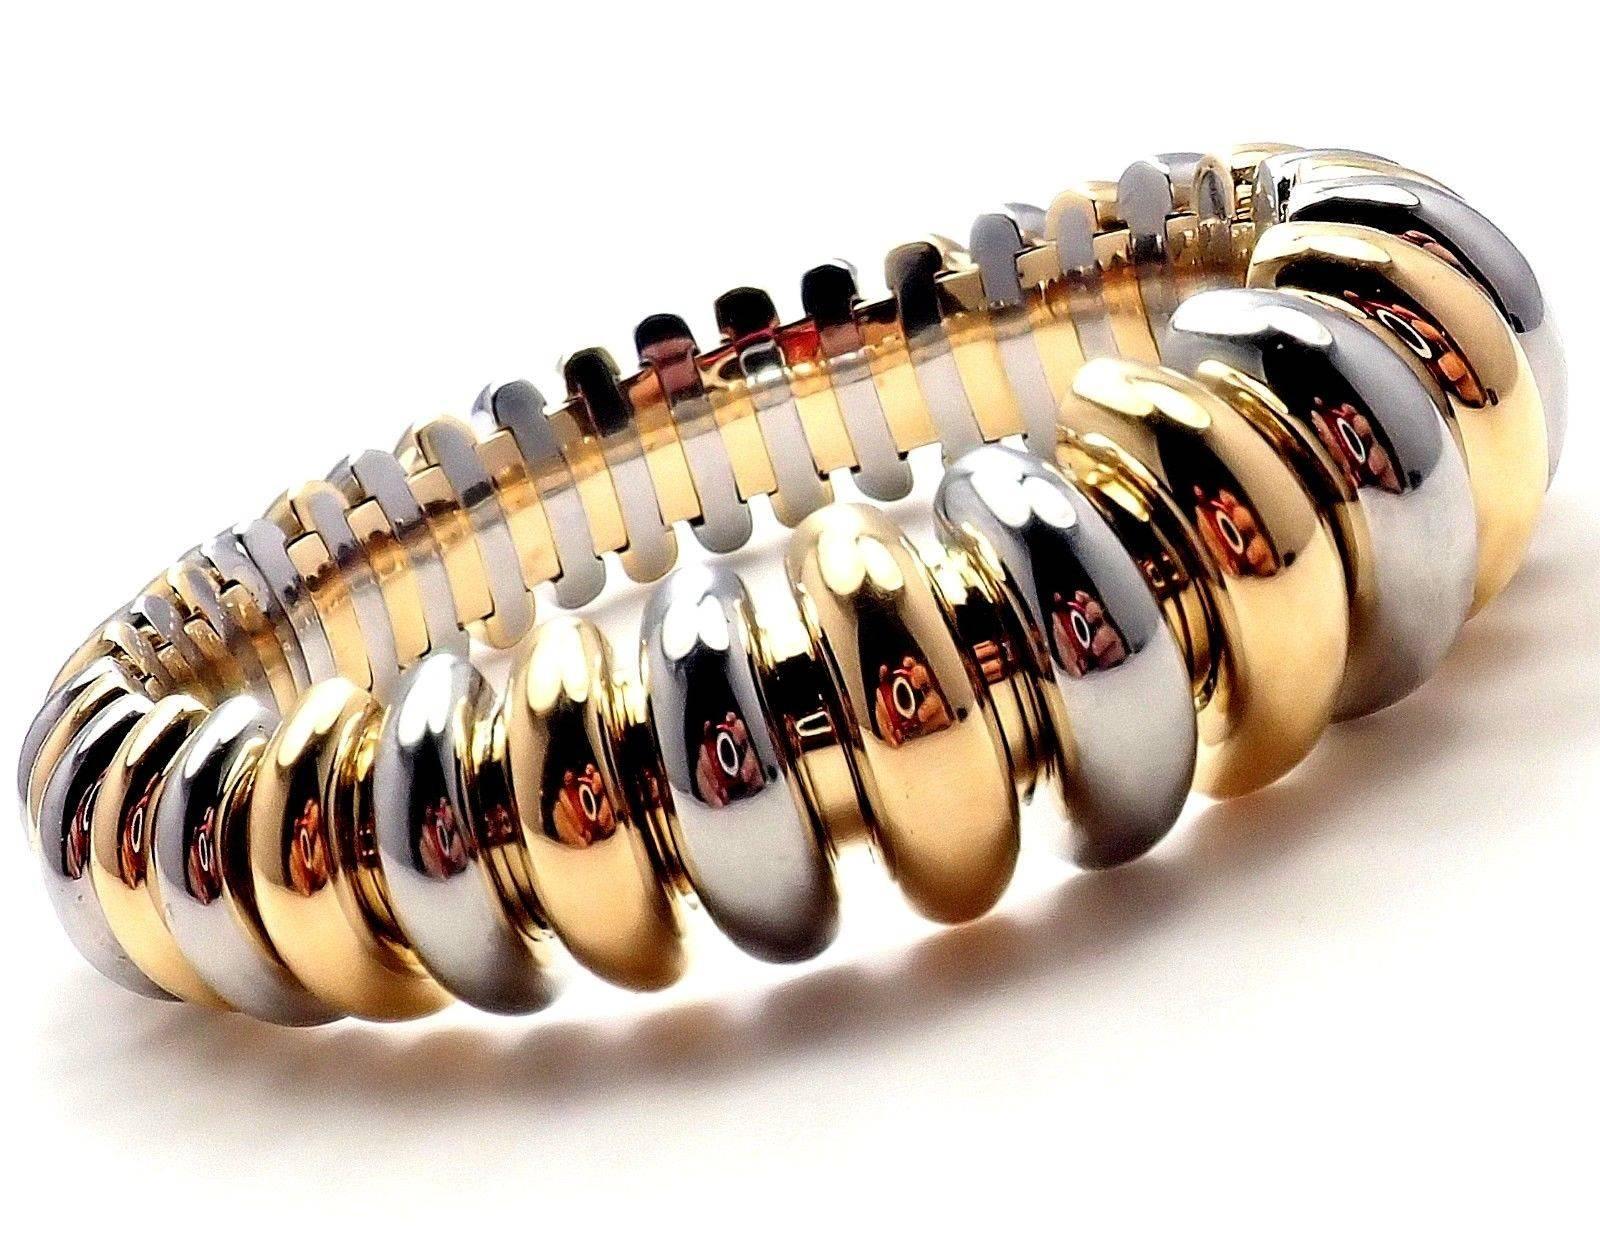 18k White And Yellow Gold Celtaura Bangle Bracelet by Bulgari.
Details:
Length: 7.5